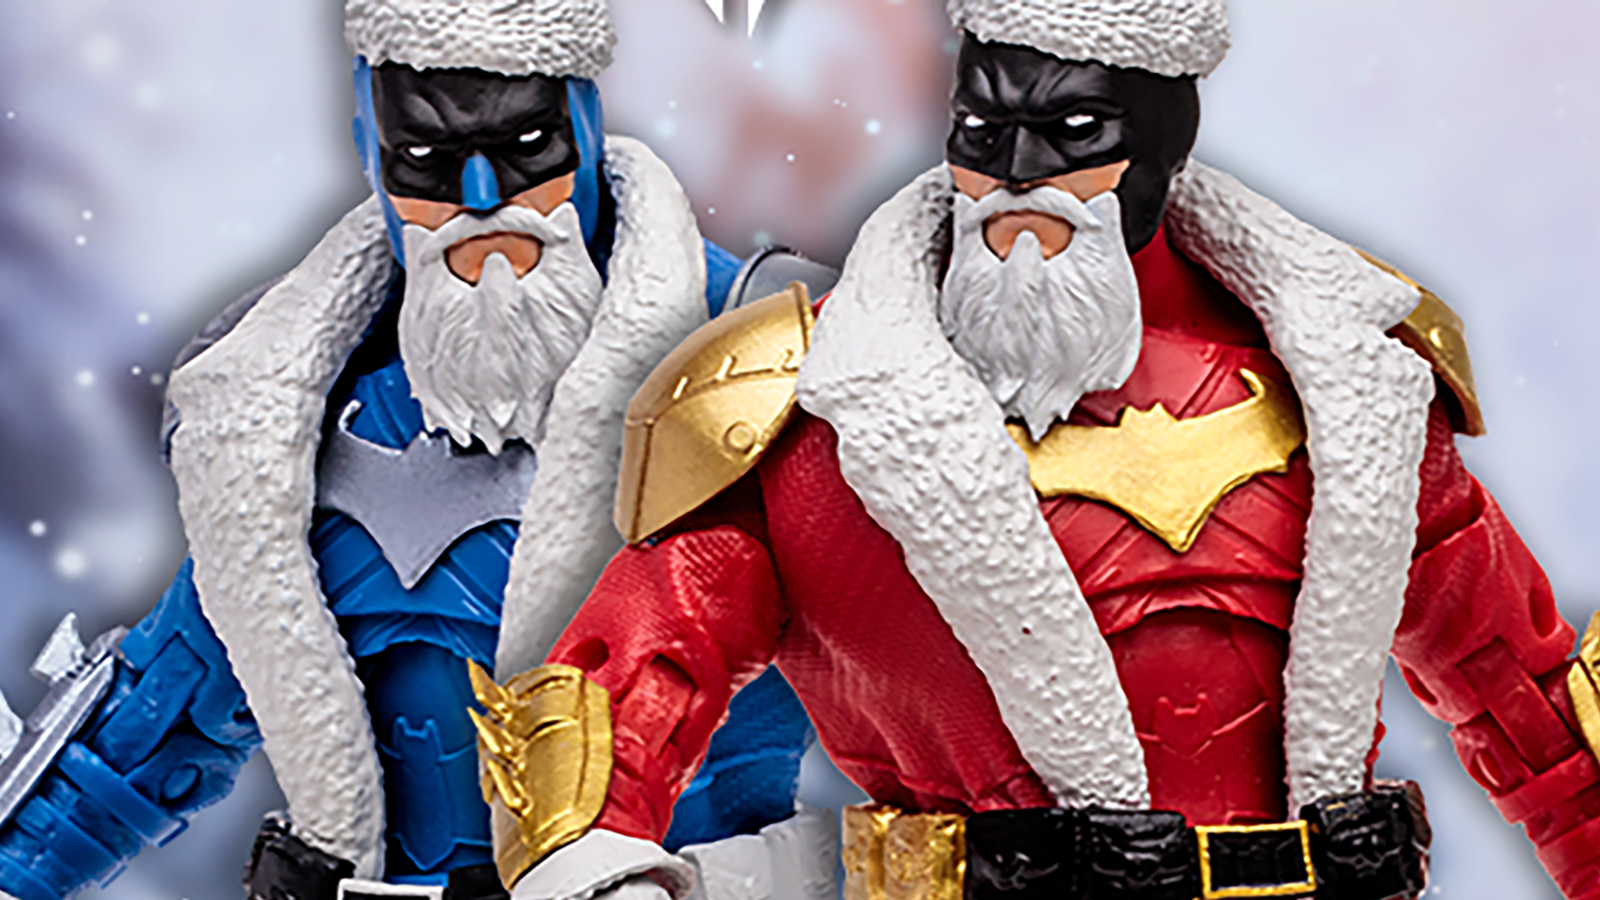 Batman is now Santa Claus (Don't ask, just buy it) | Popverse